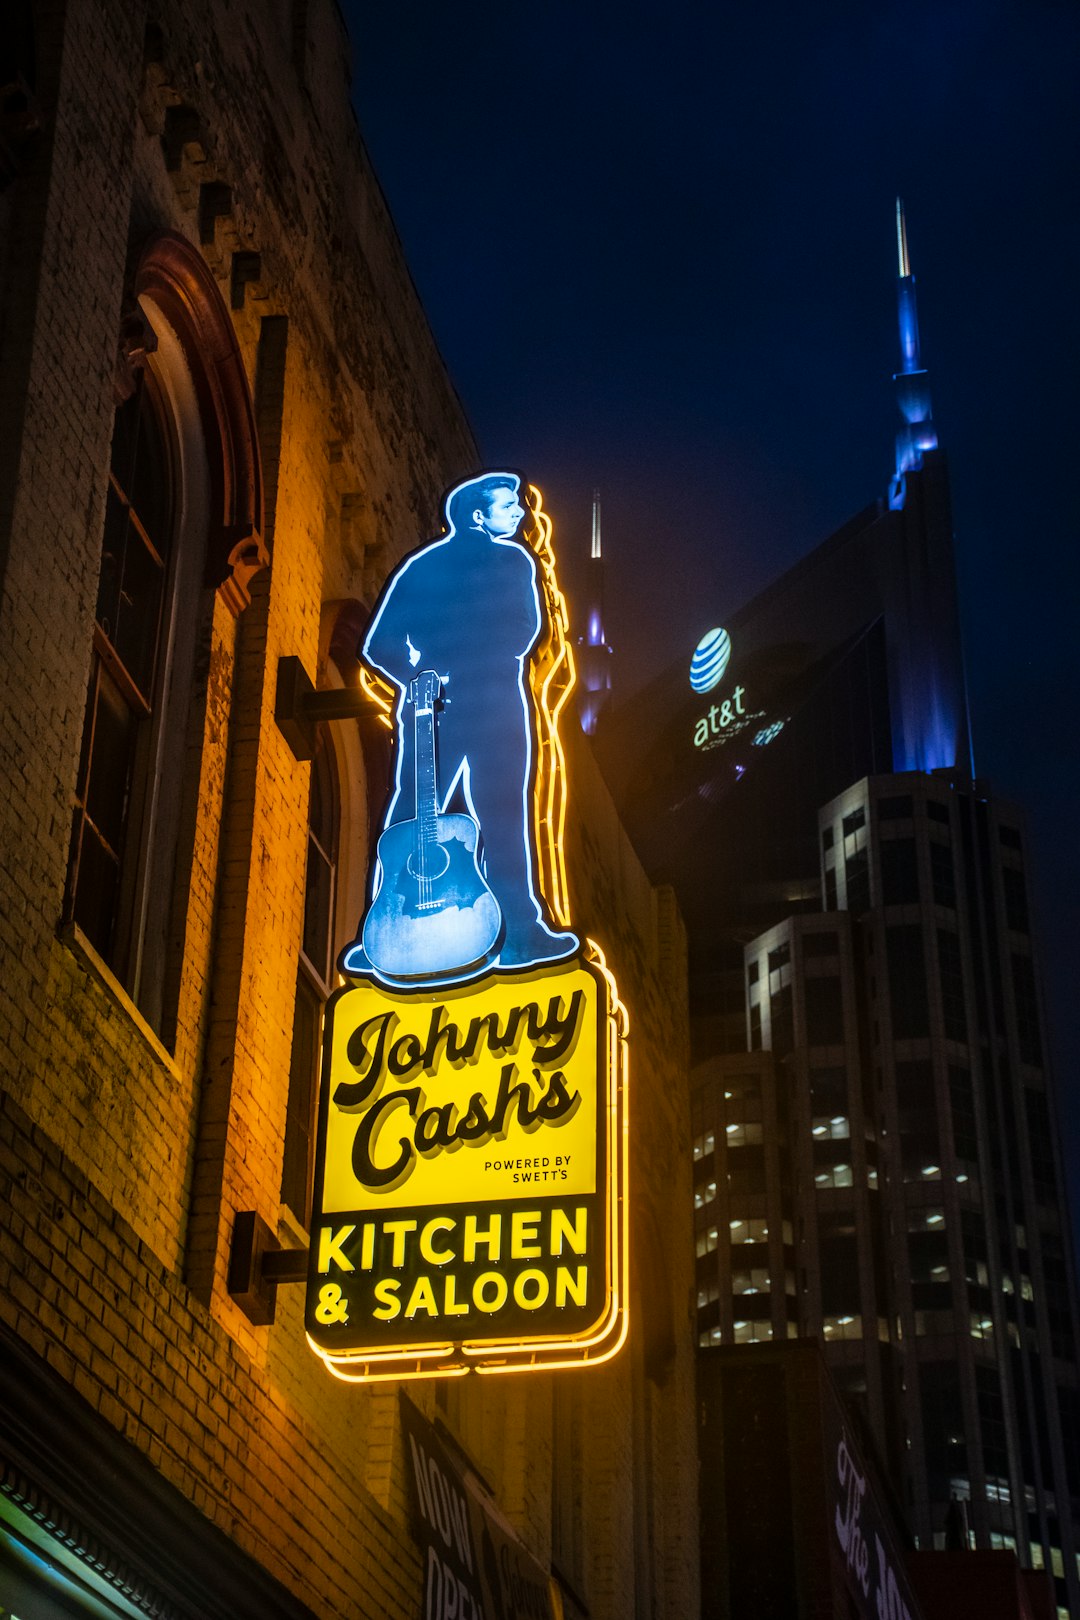 Johnny Cash's Kitchen & Saloon sign